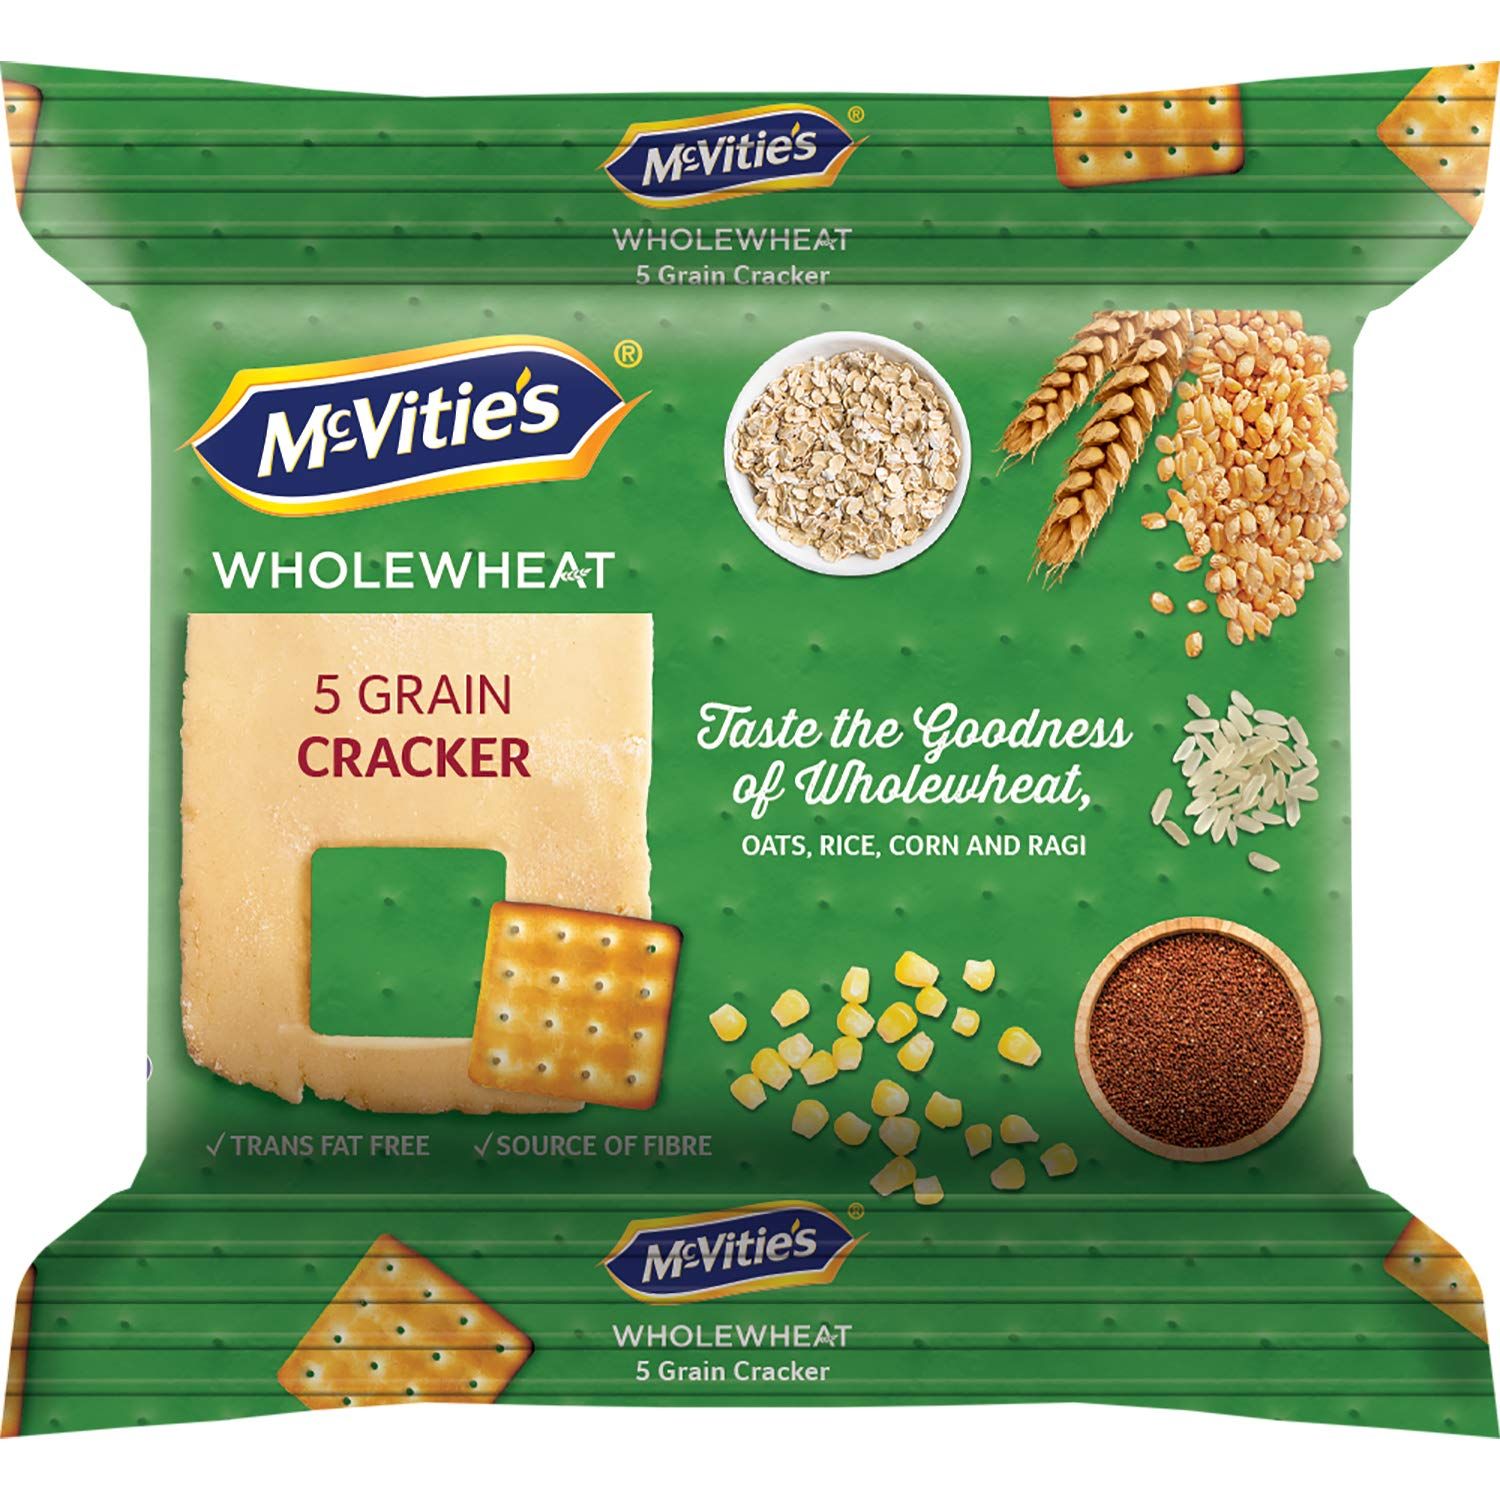 McVities Wholewheat 5 Grain Cracker Biscuits Image